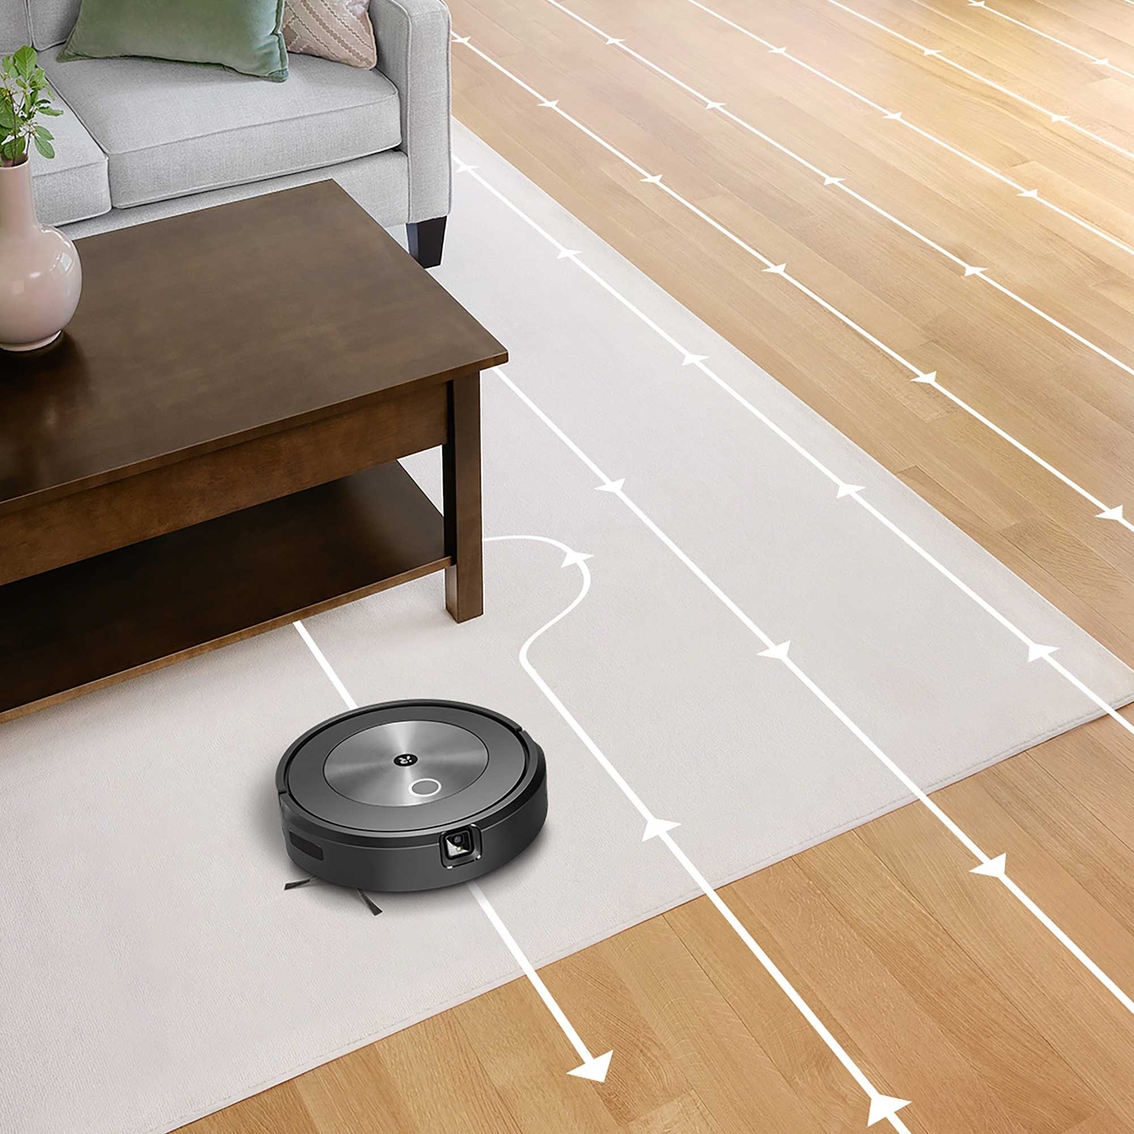 iRobot Roomba j7 (7150) Wi-Fi Connected Robot Vacuum - Image 5 of 10